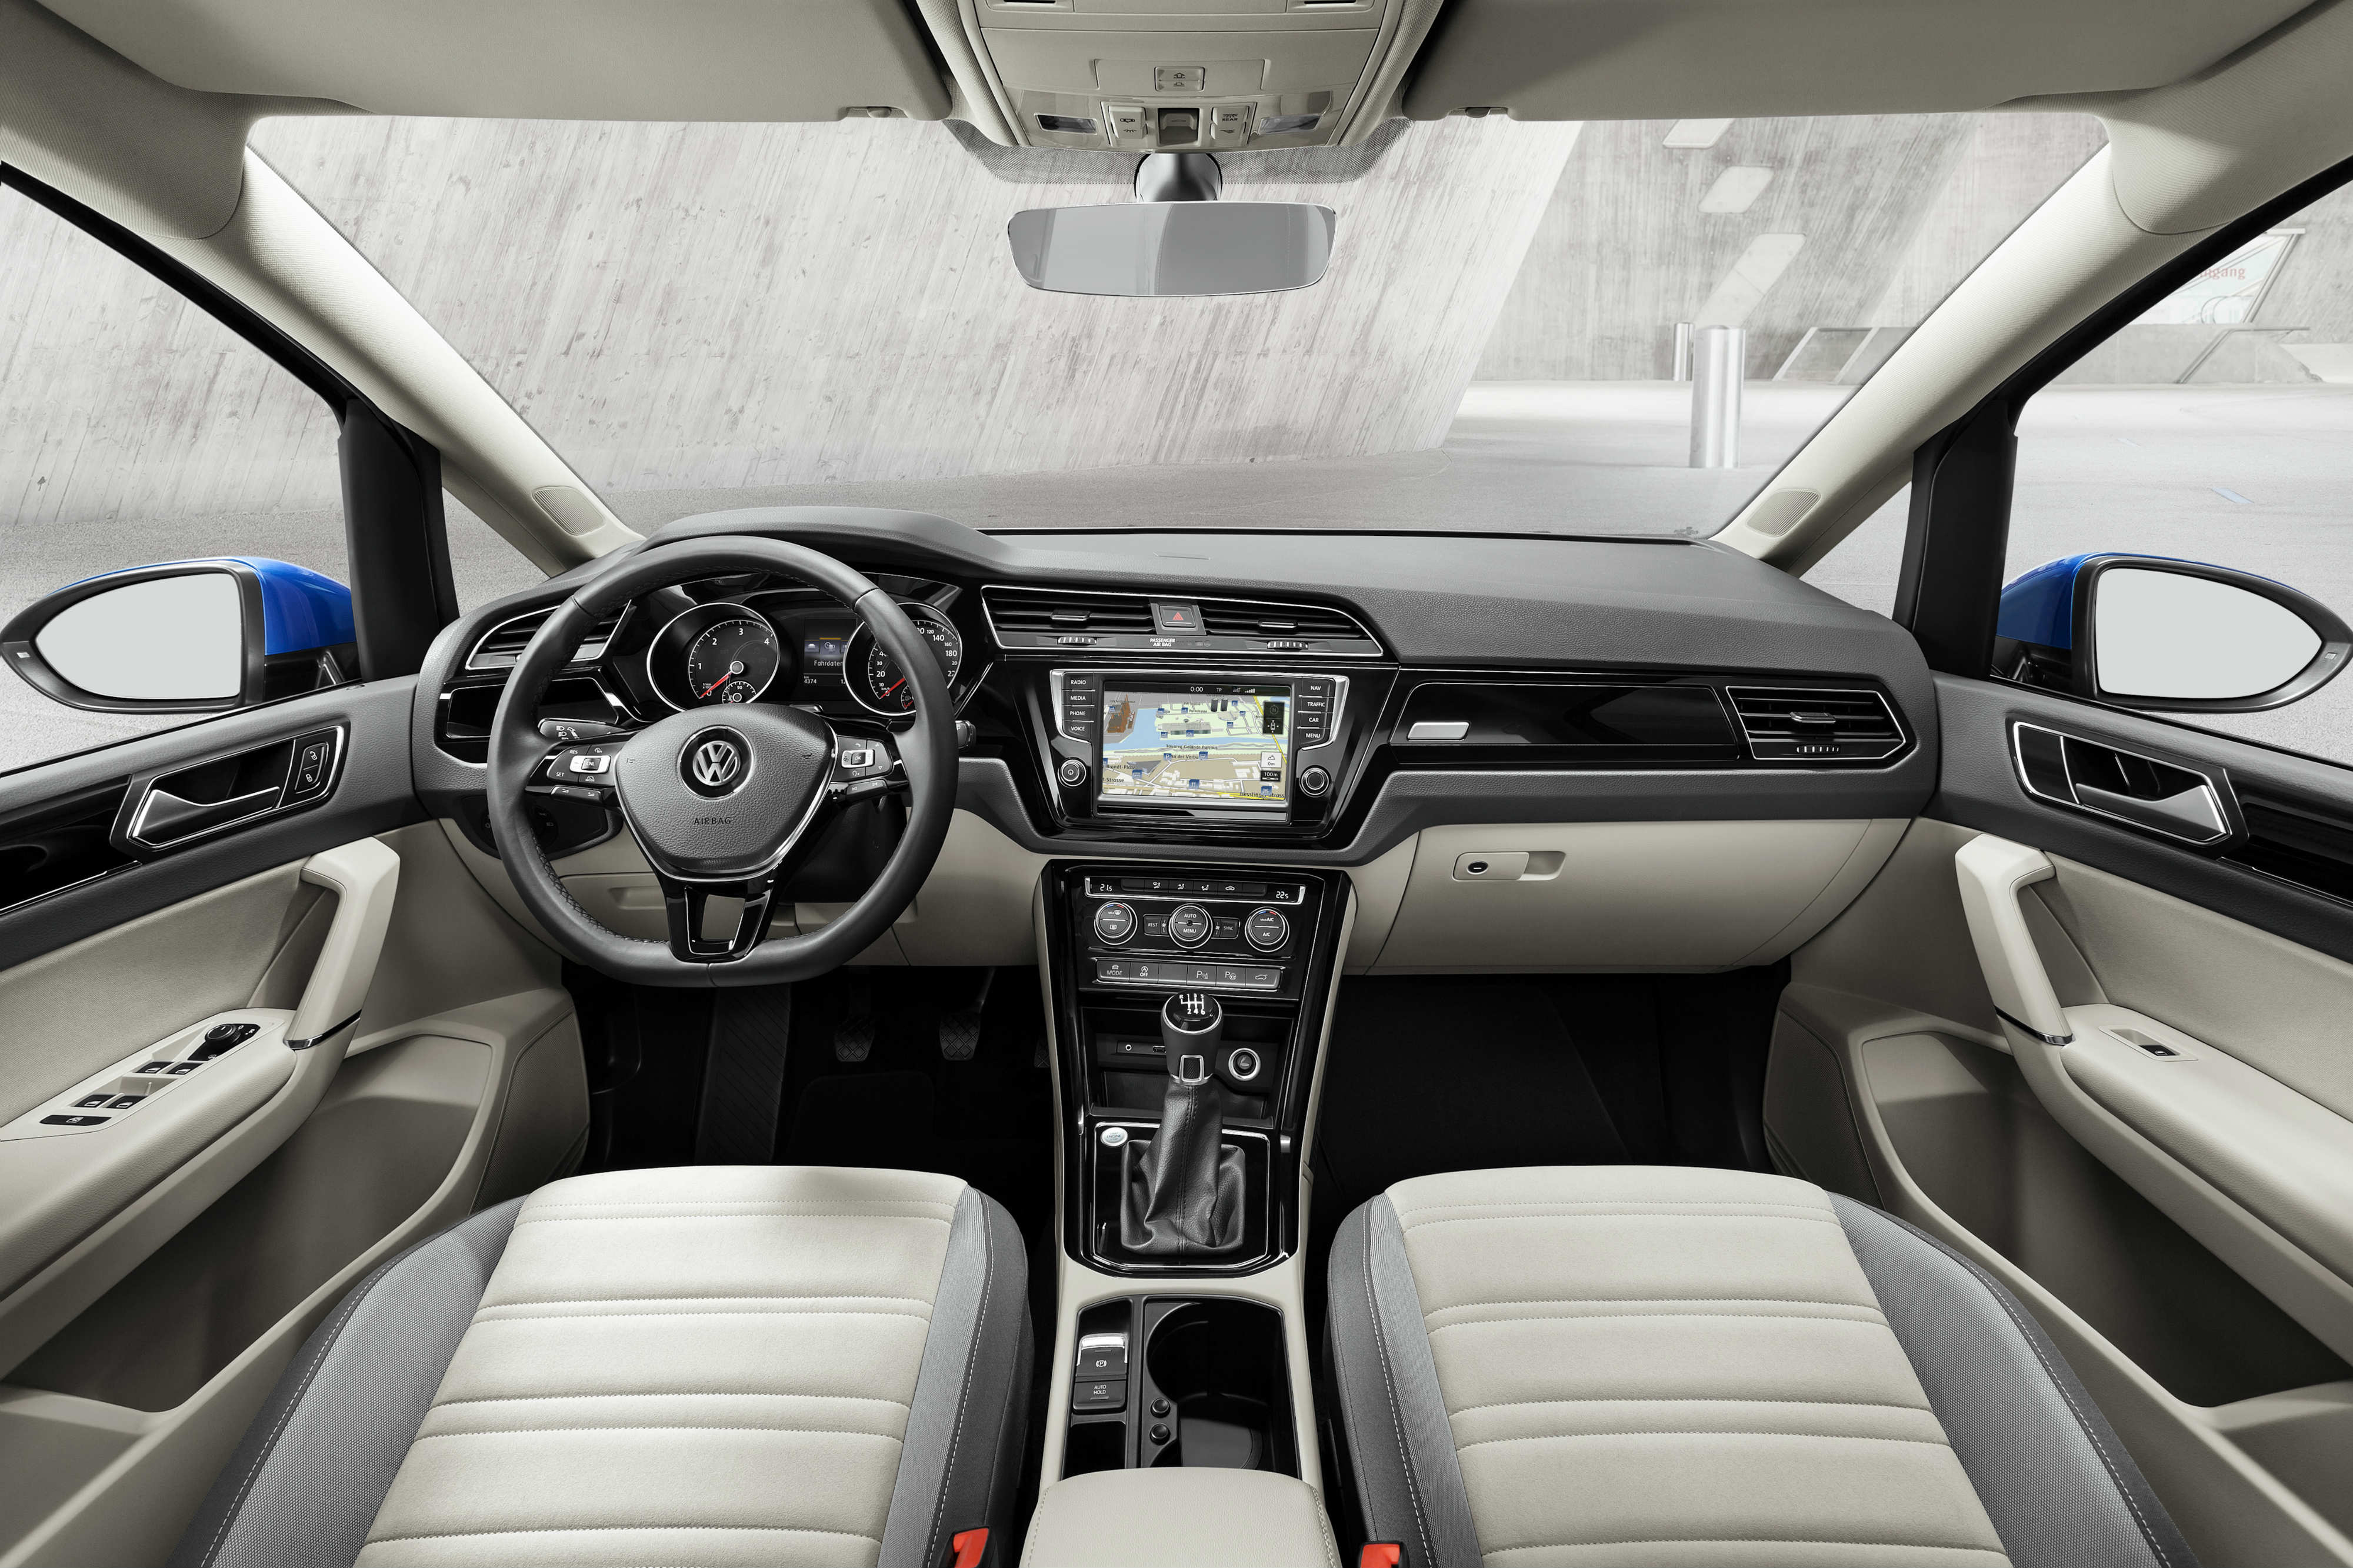 2015 Volkswagen Touran people carrier revealed